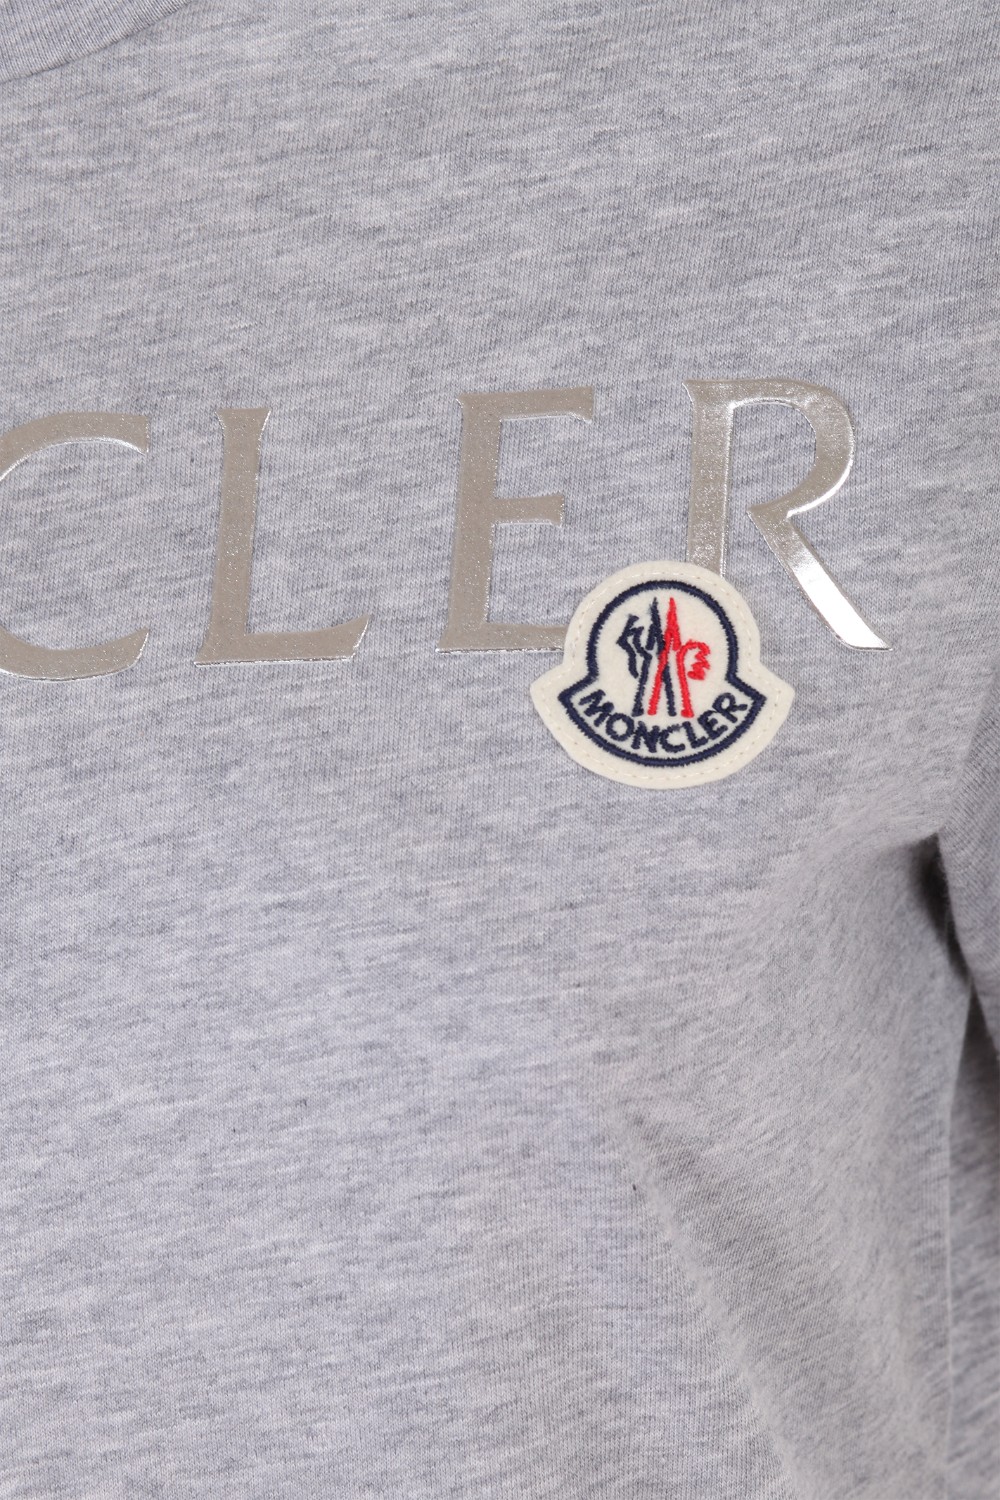 shop MONCLER Saldi T-shirt: Moncler t-shirt grigia.
Girocollo mezza manica.
Logo piccolo Moncler e scritta in argento.
Vestibilità slim. 8C715 10 V8094-910 number 2550748